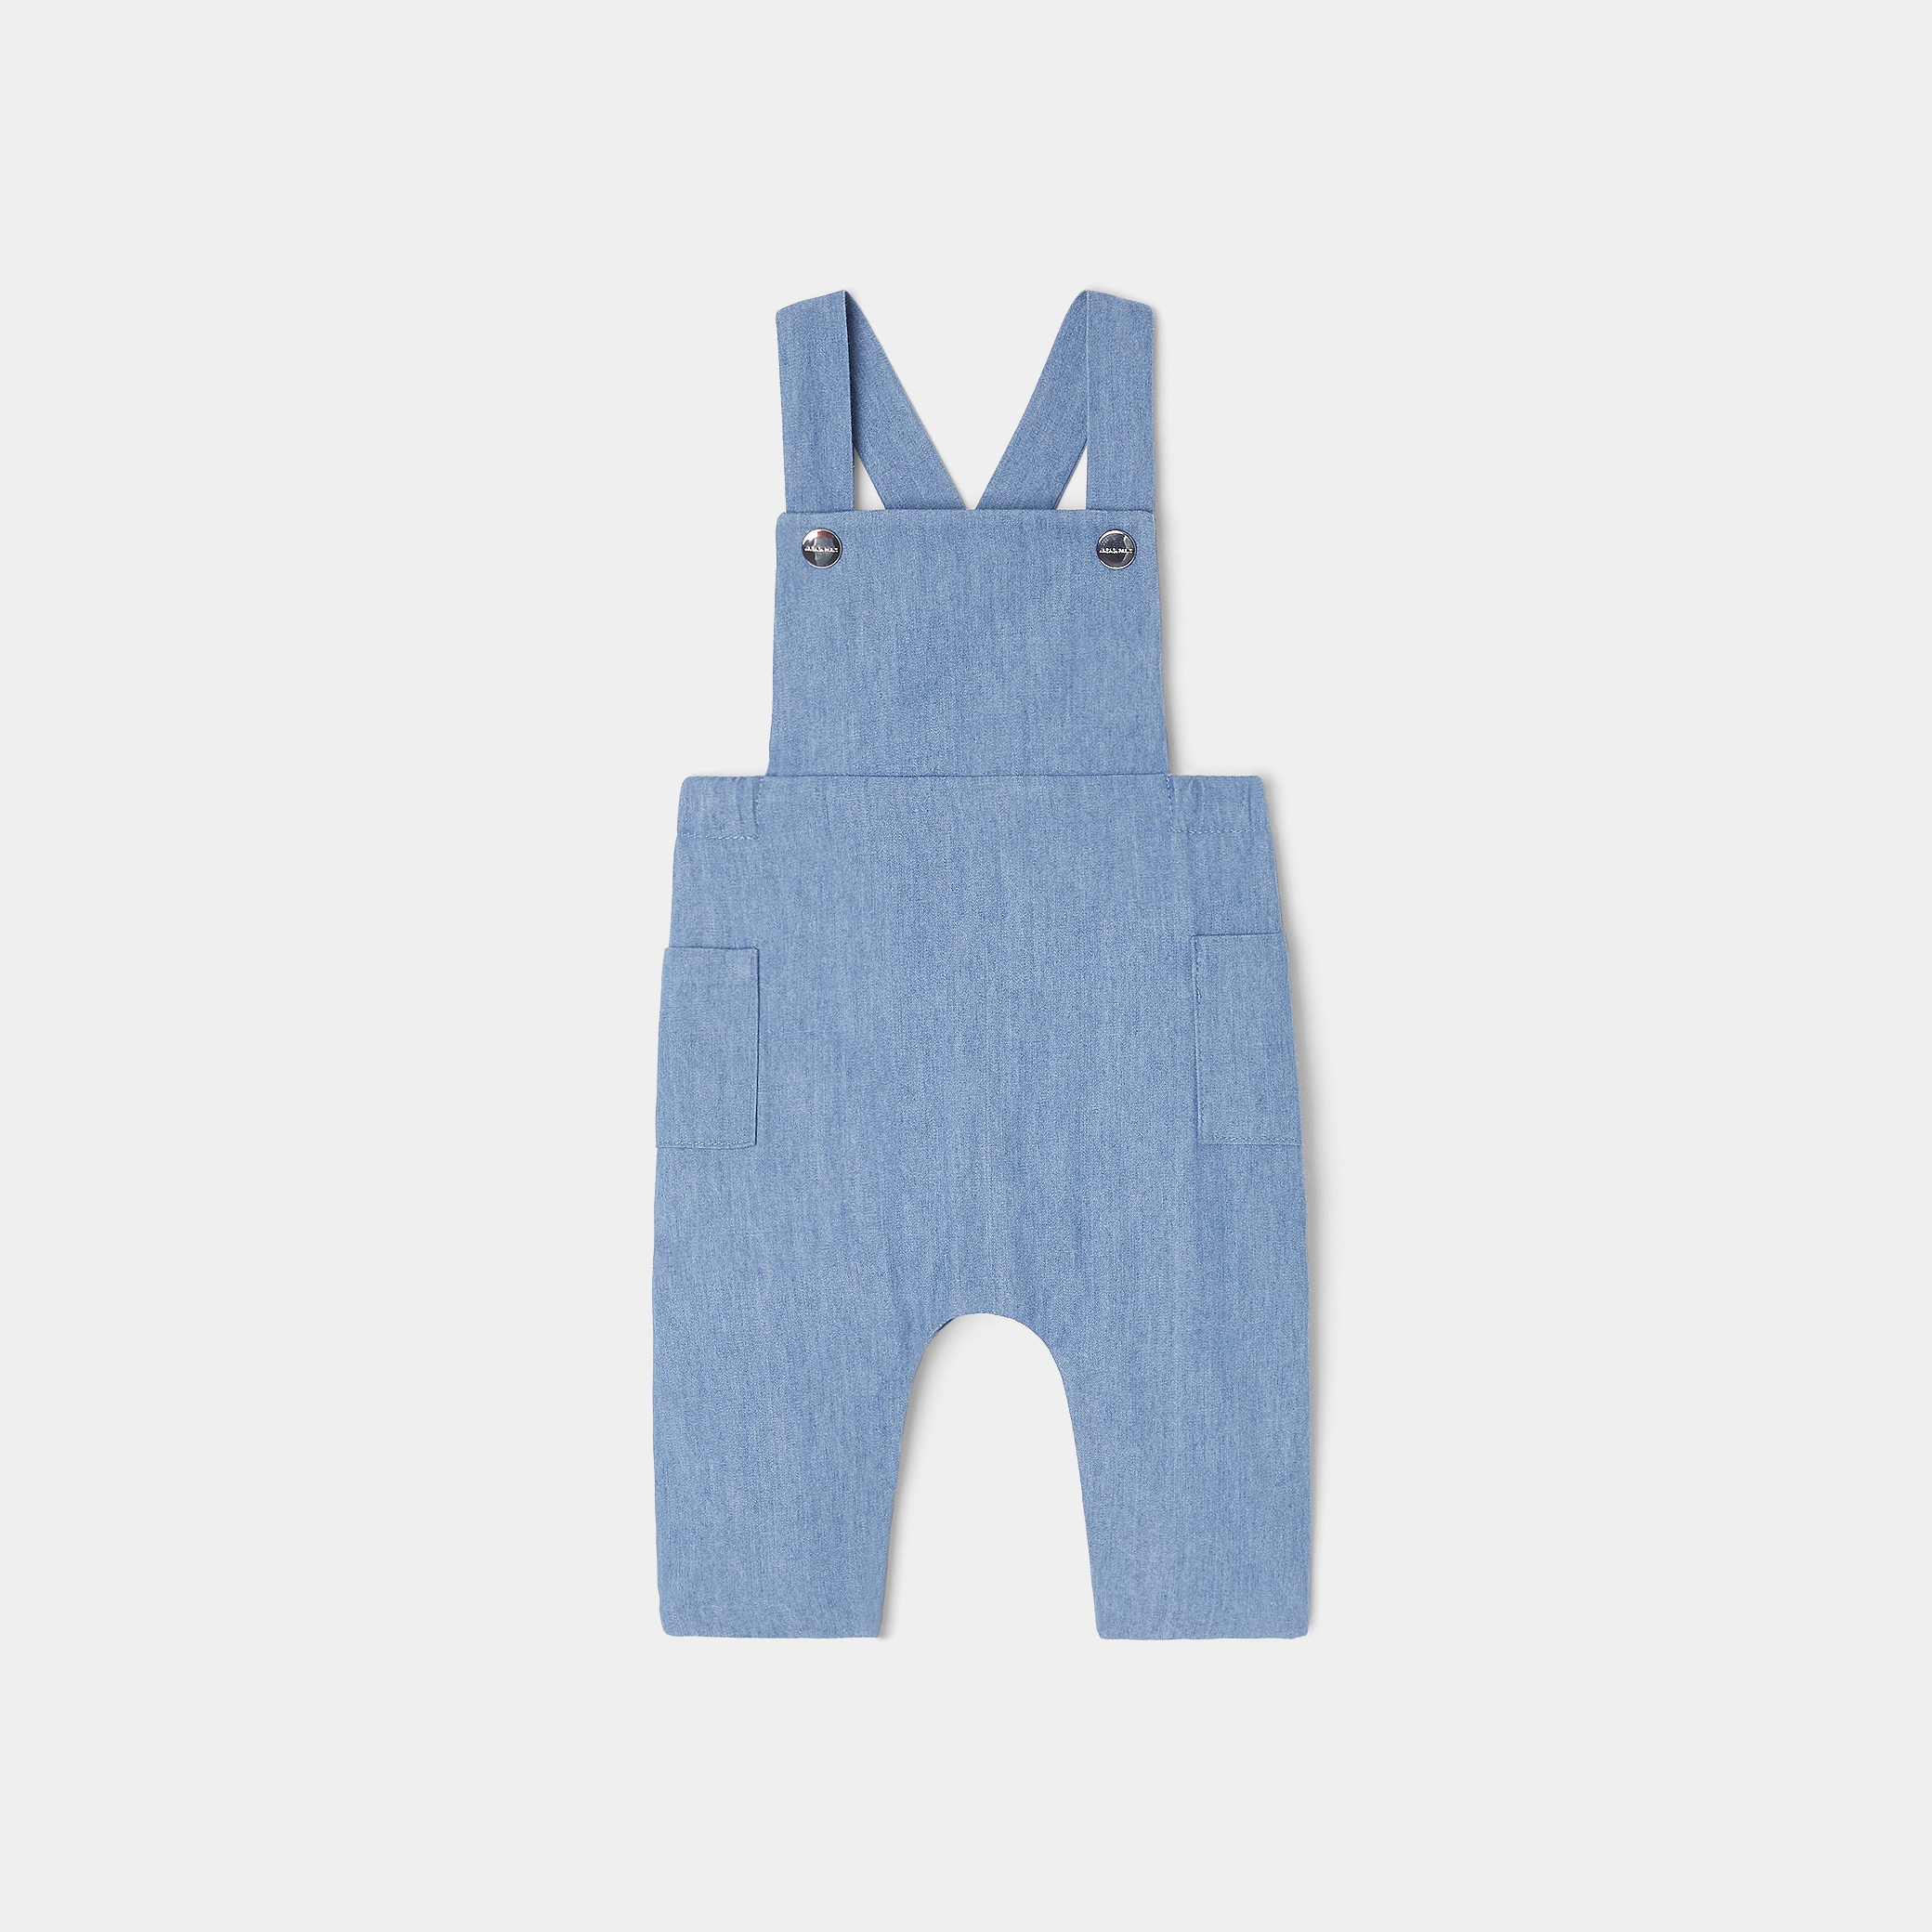 Baby boy denim overalls